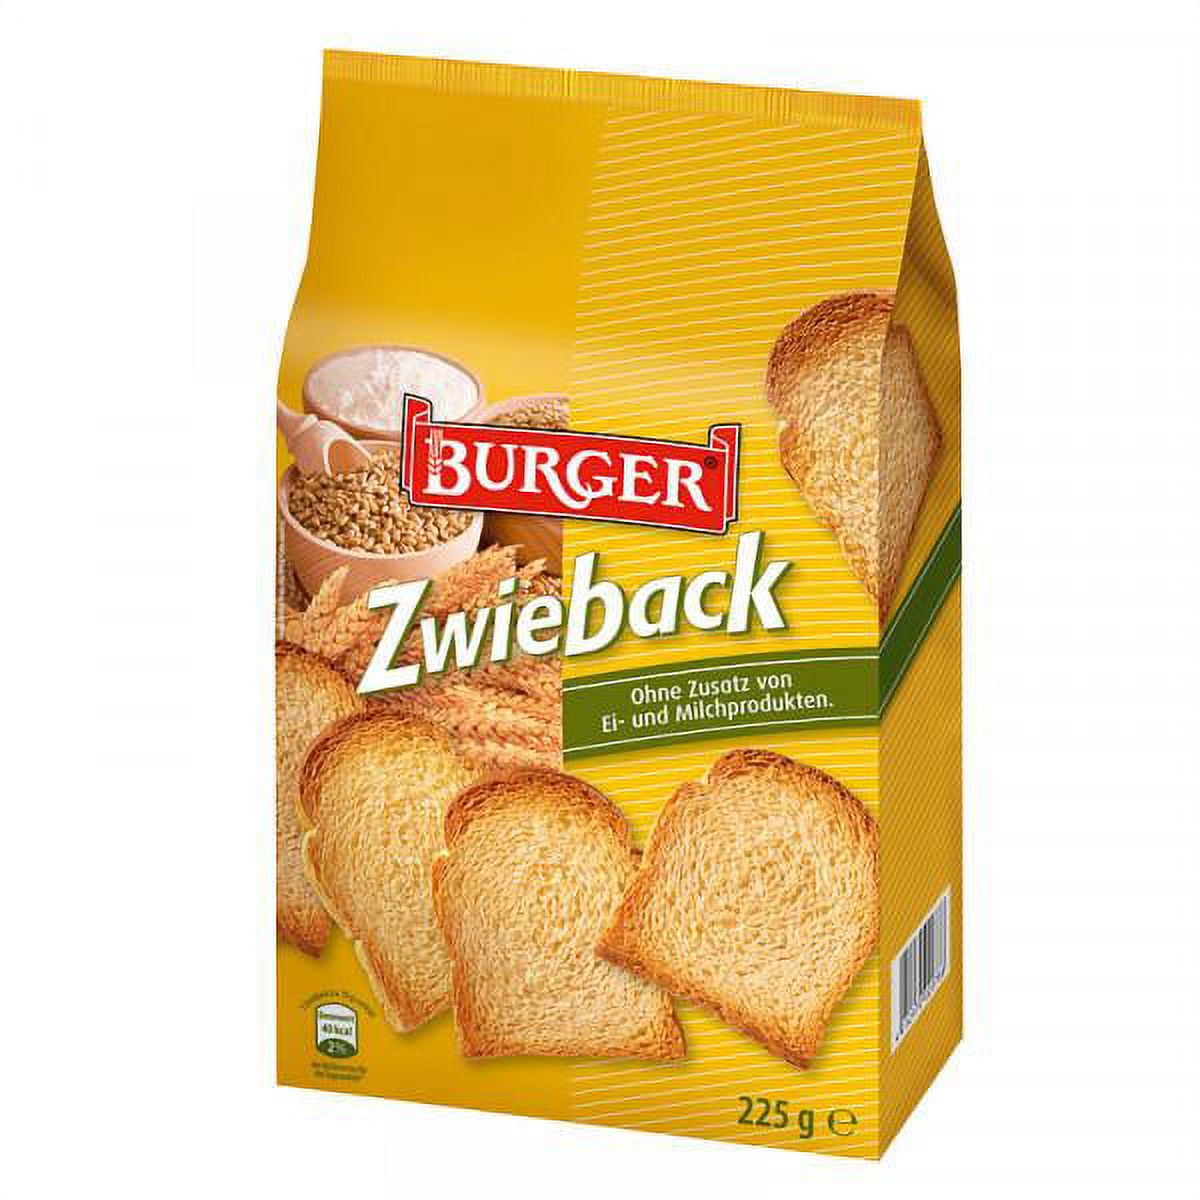 Zwieback, Rusks (Burger) 8 oz (225g) - image 1 of 1